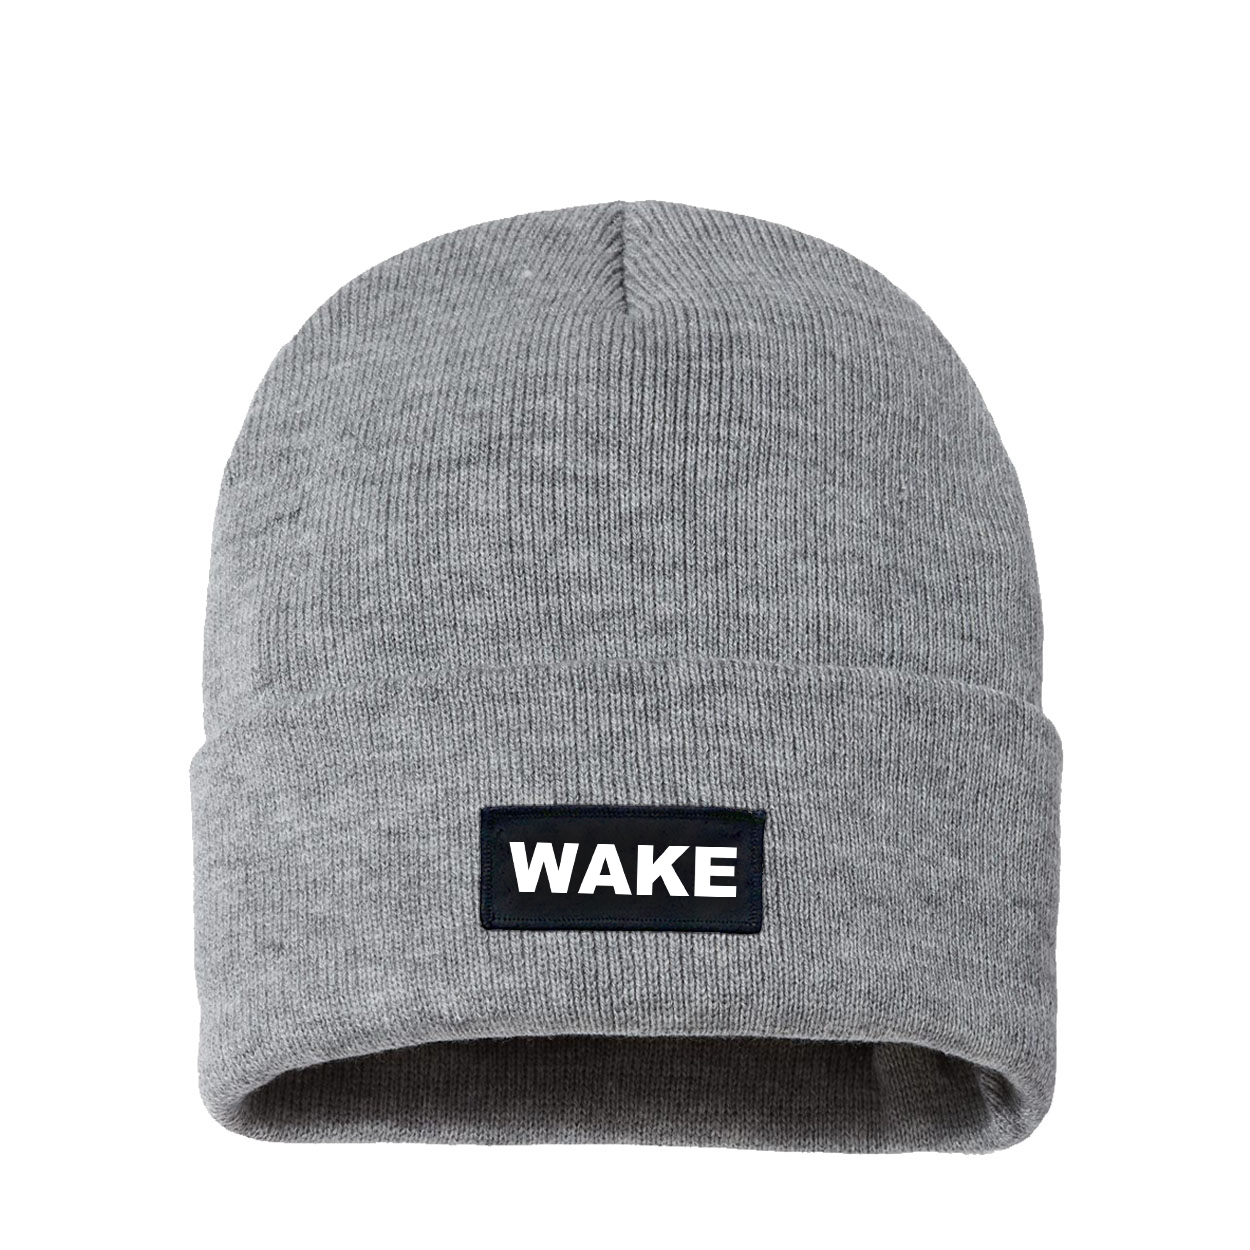 Wake Brand Logo Night Out Woven Patch Sherpa Lined Cuffed Beanie Heather Gray